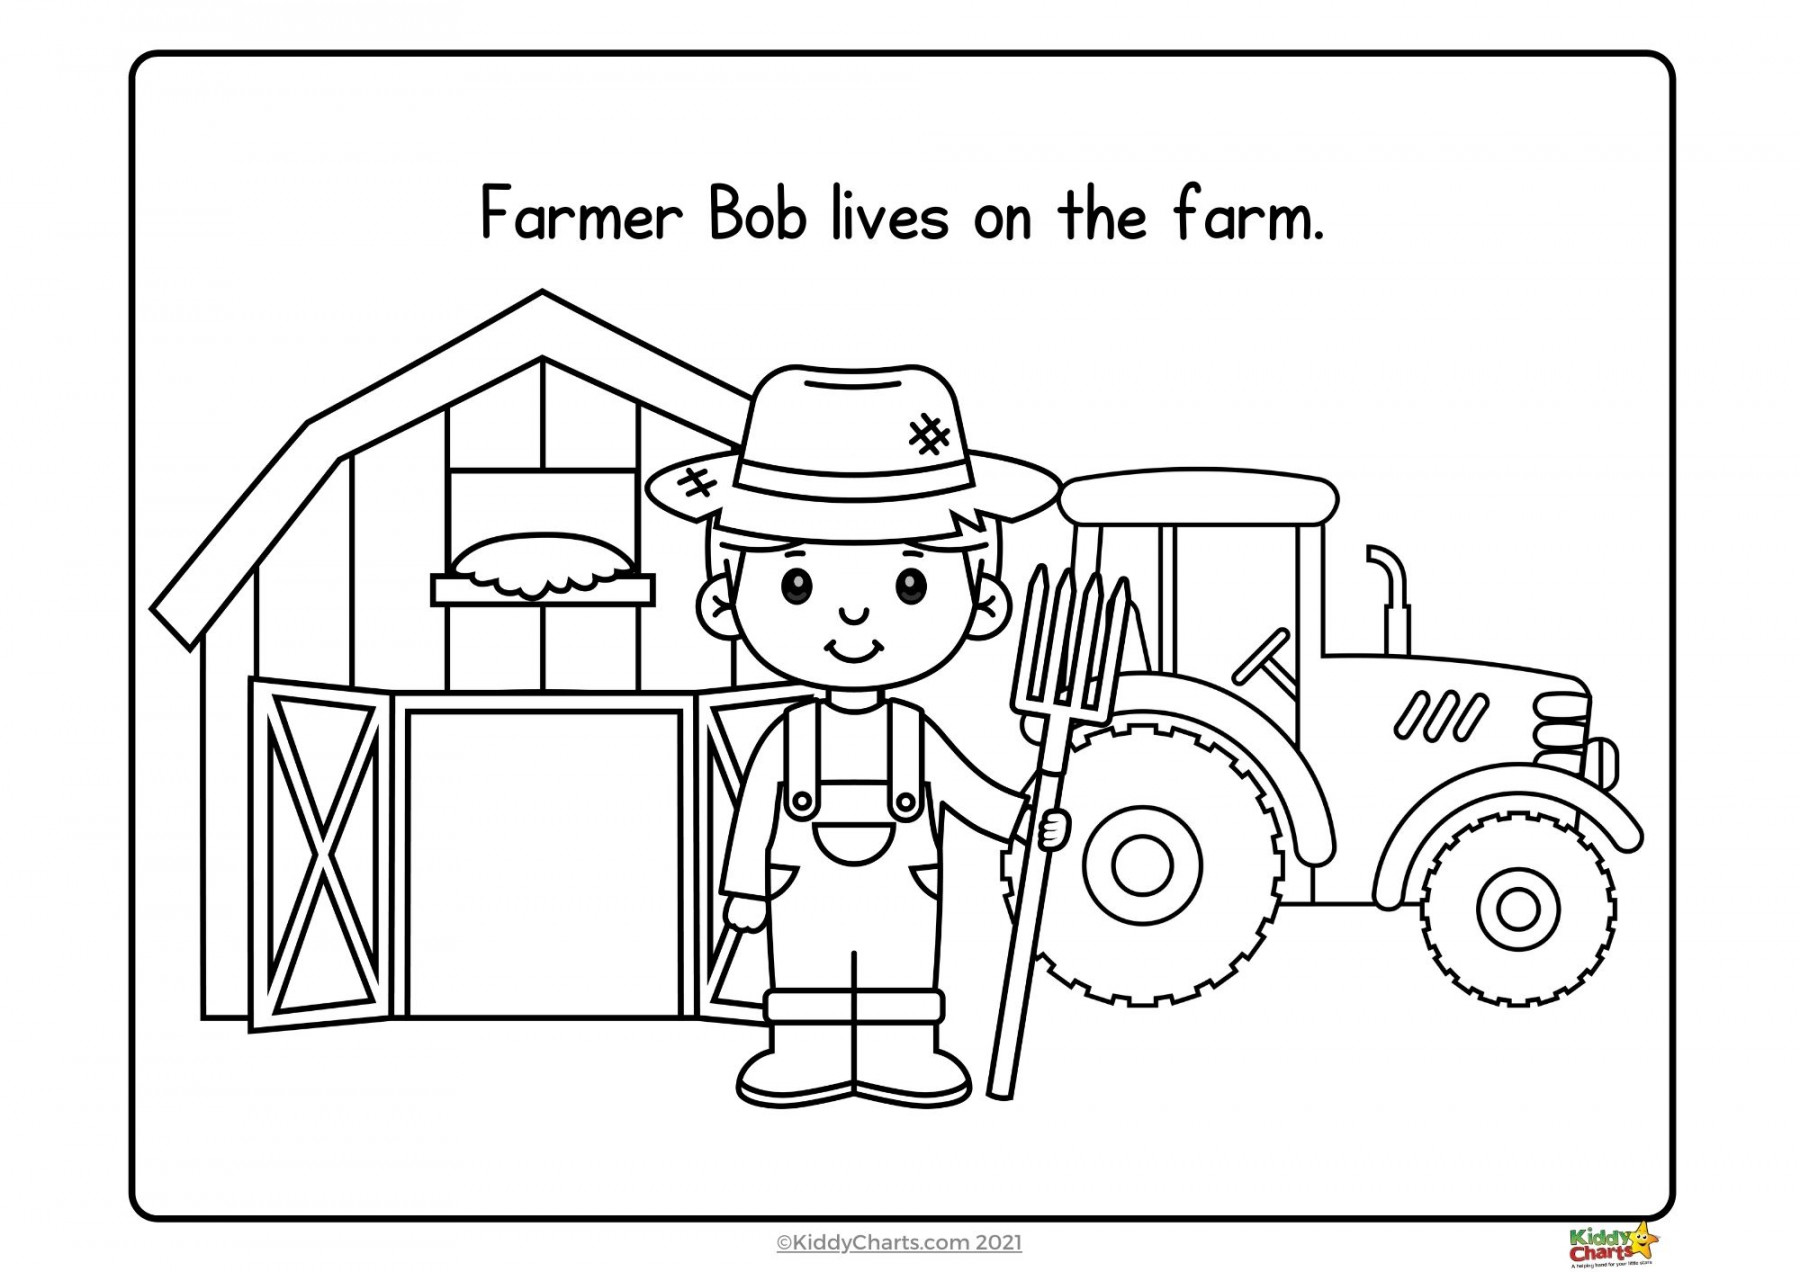 Kindergarten worksheets: On The farm - KiddyCharts Shop